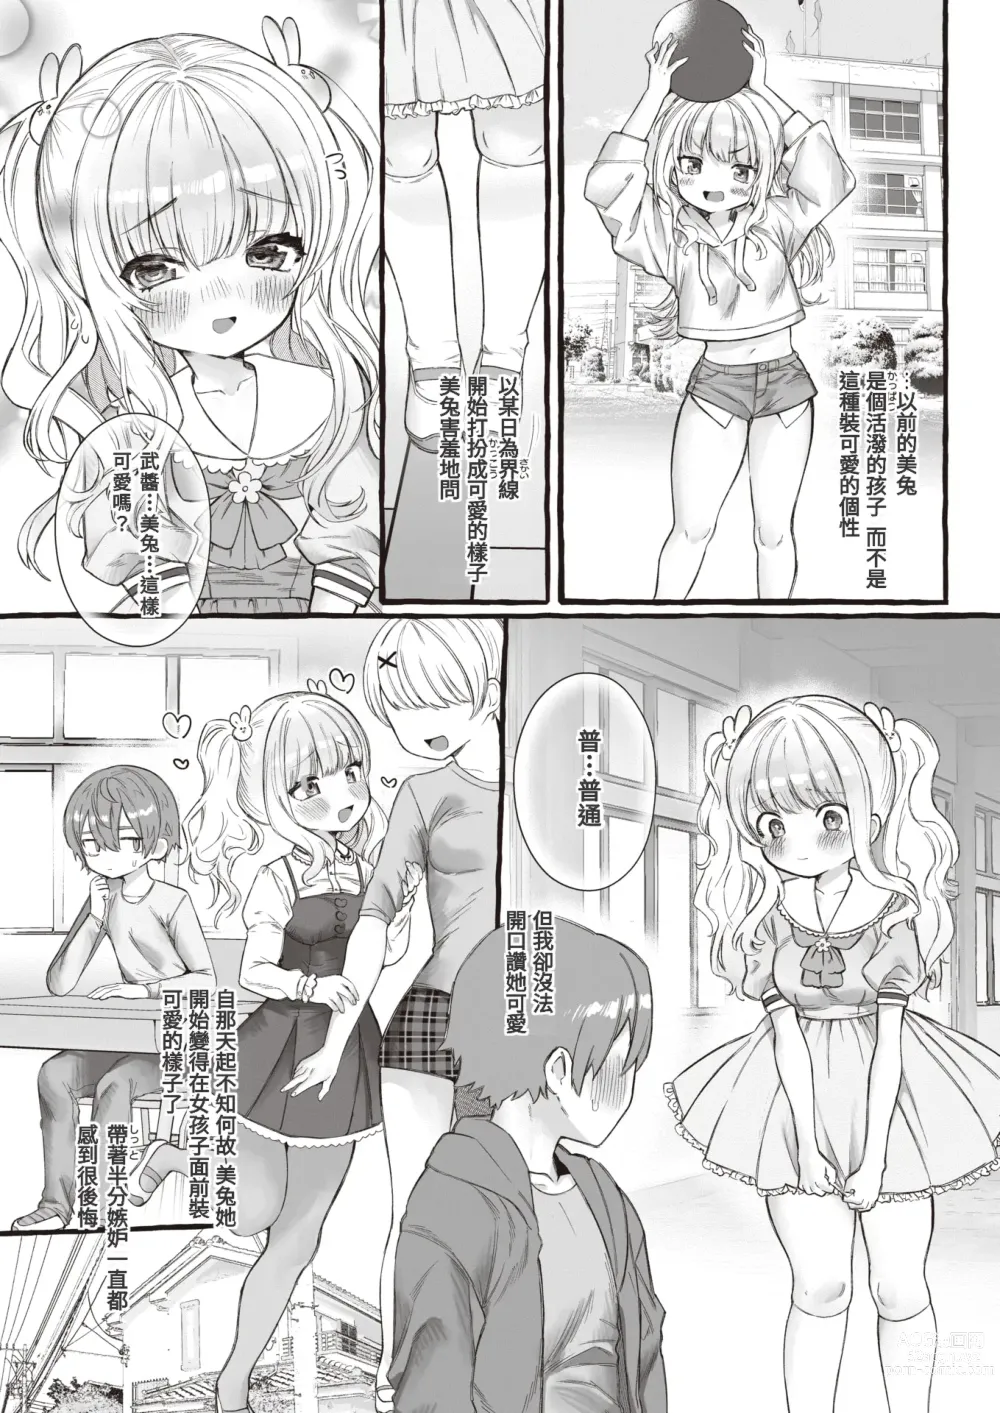 Page 3 of manga ZOO-Kei Joshi@Usagi